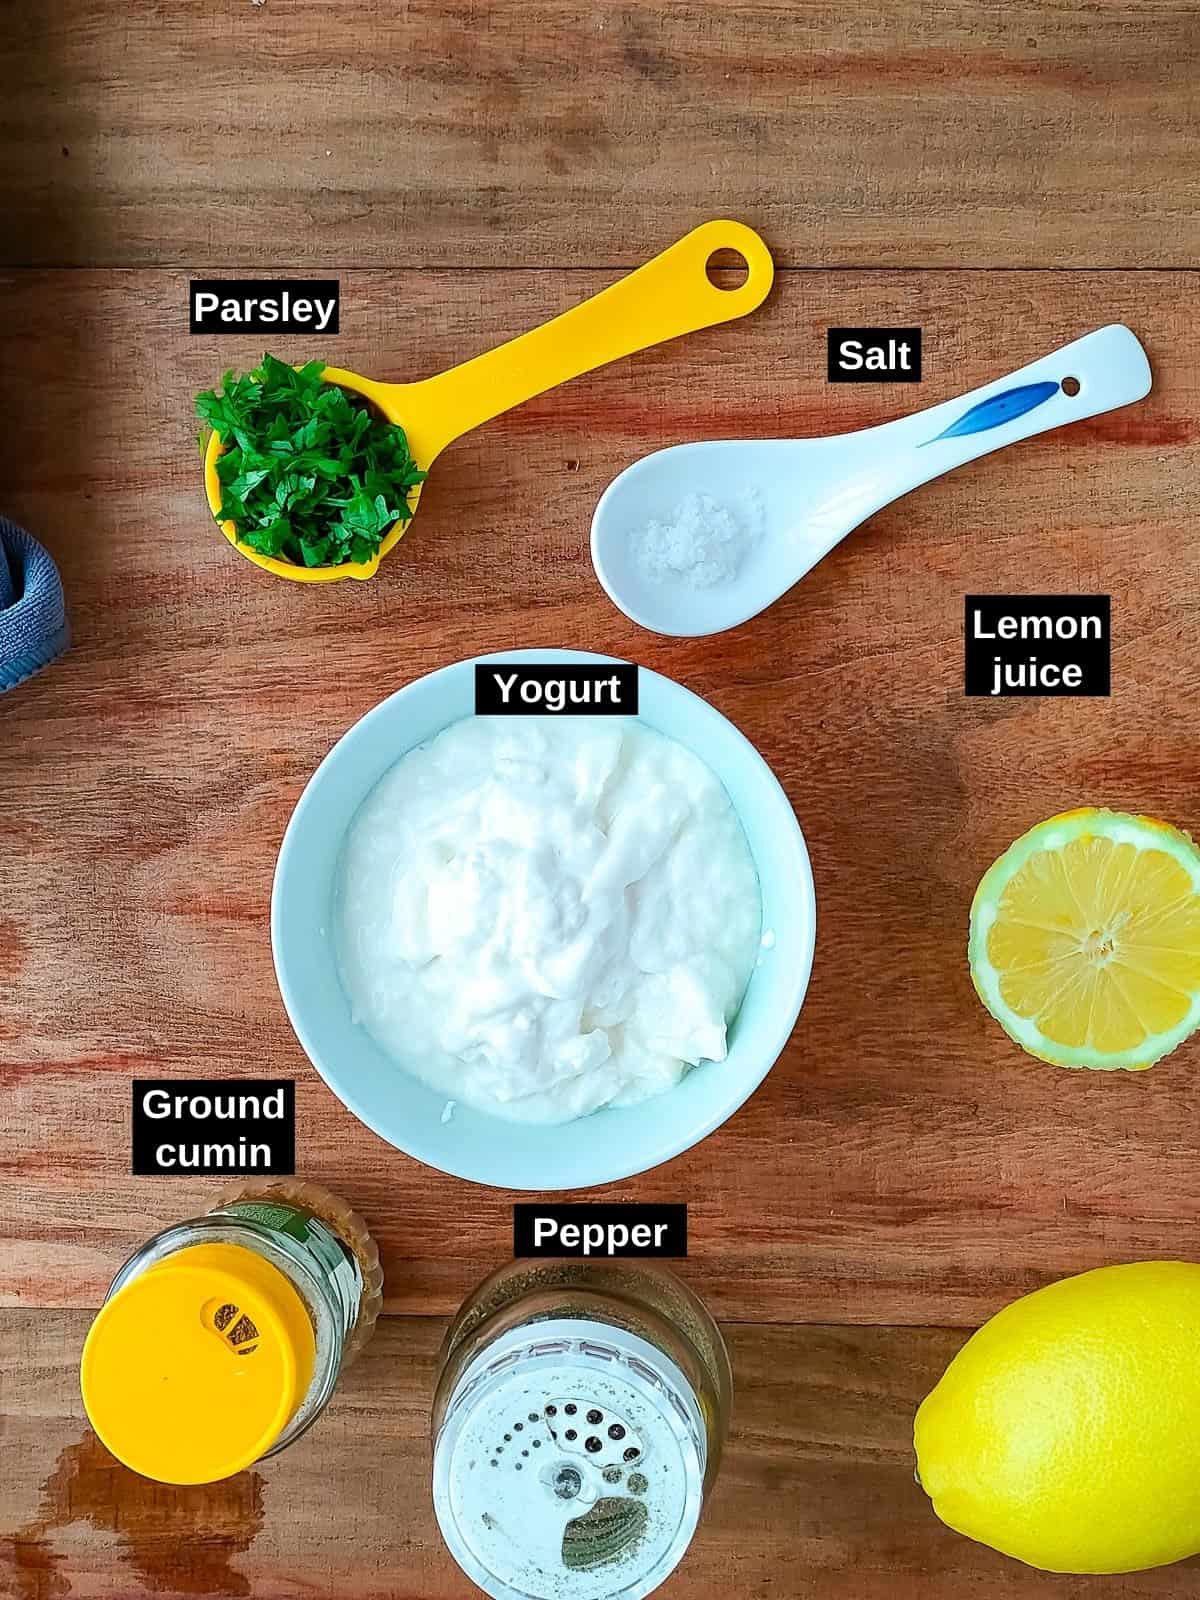 Labelled ingredients to make yogurt sauce for baked panko cod.